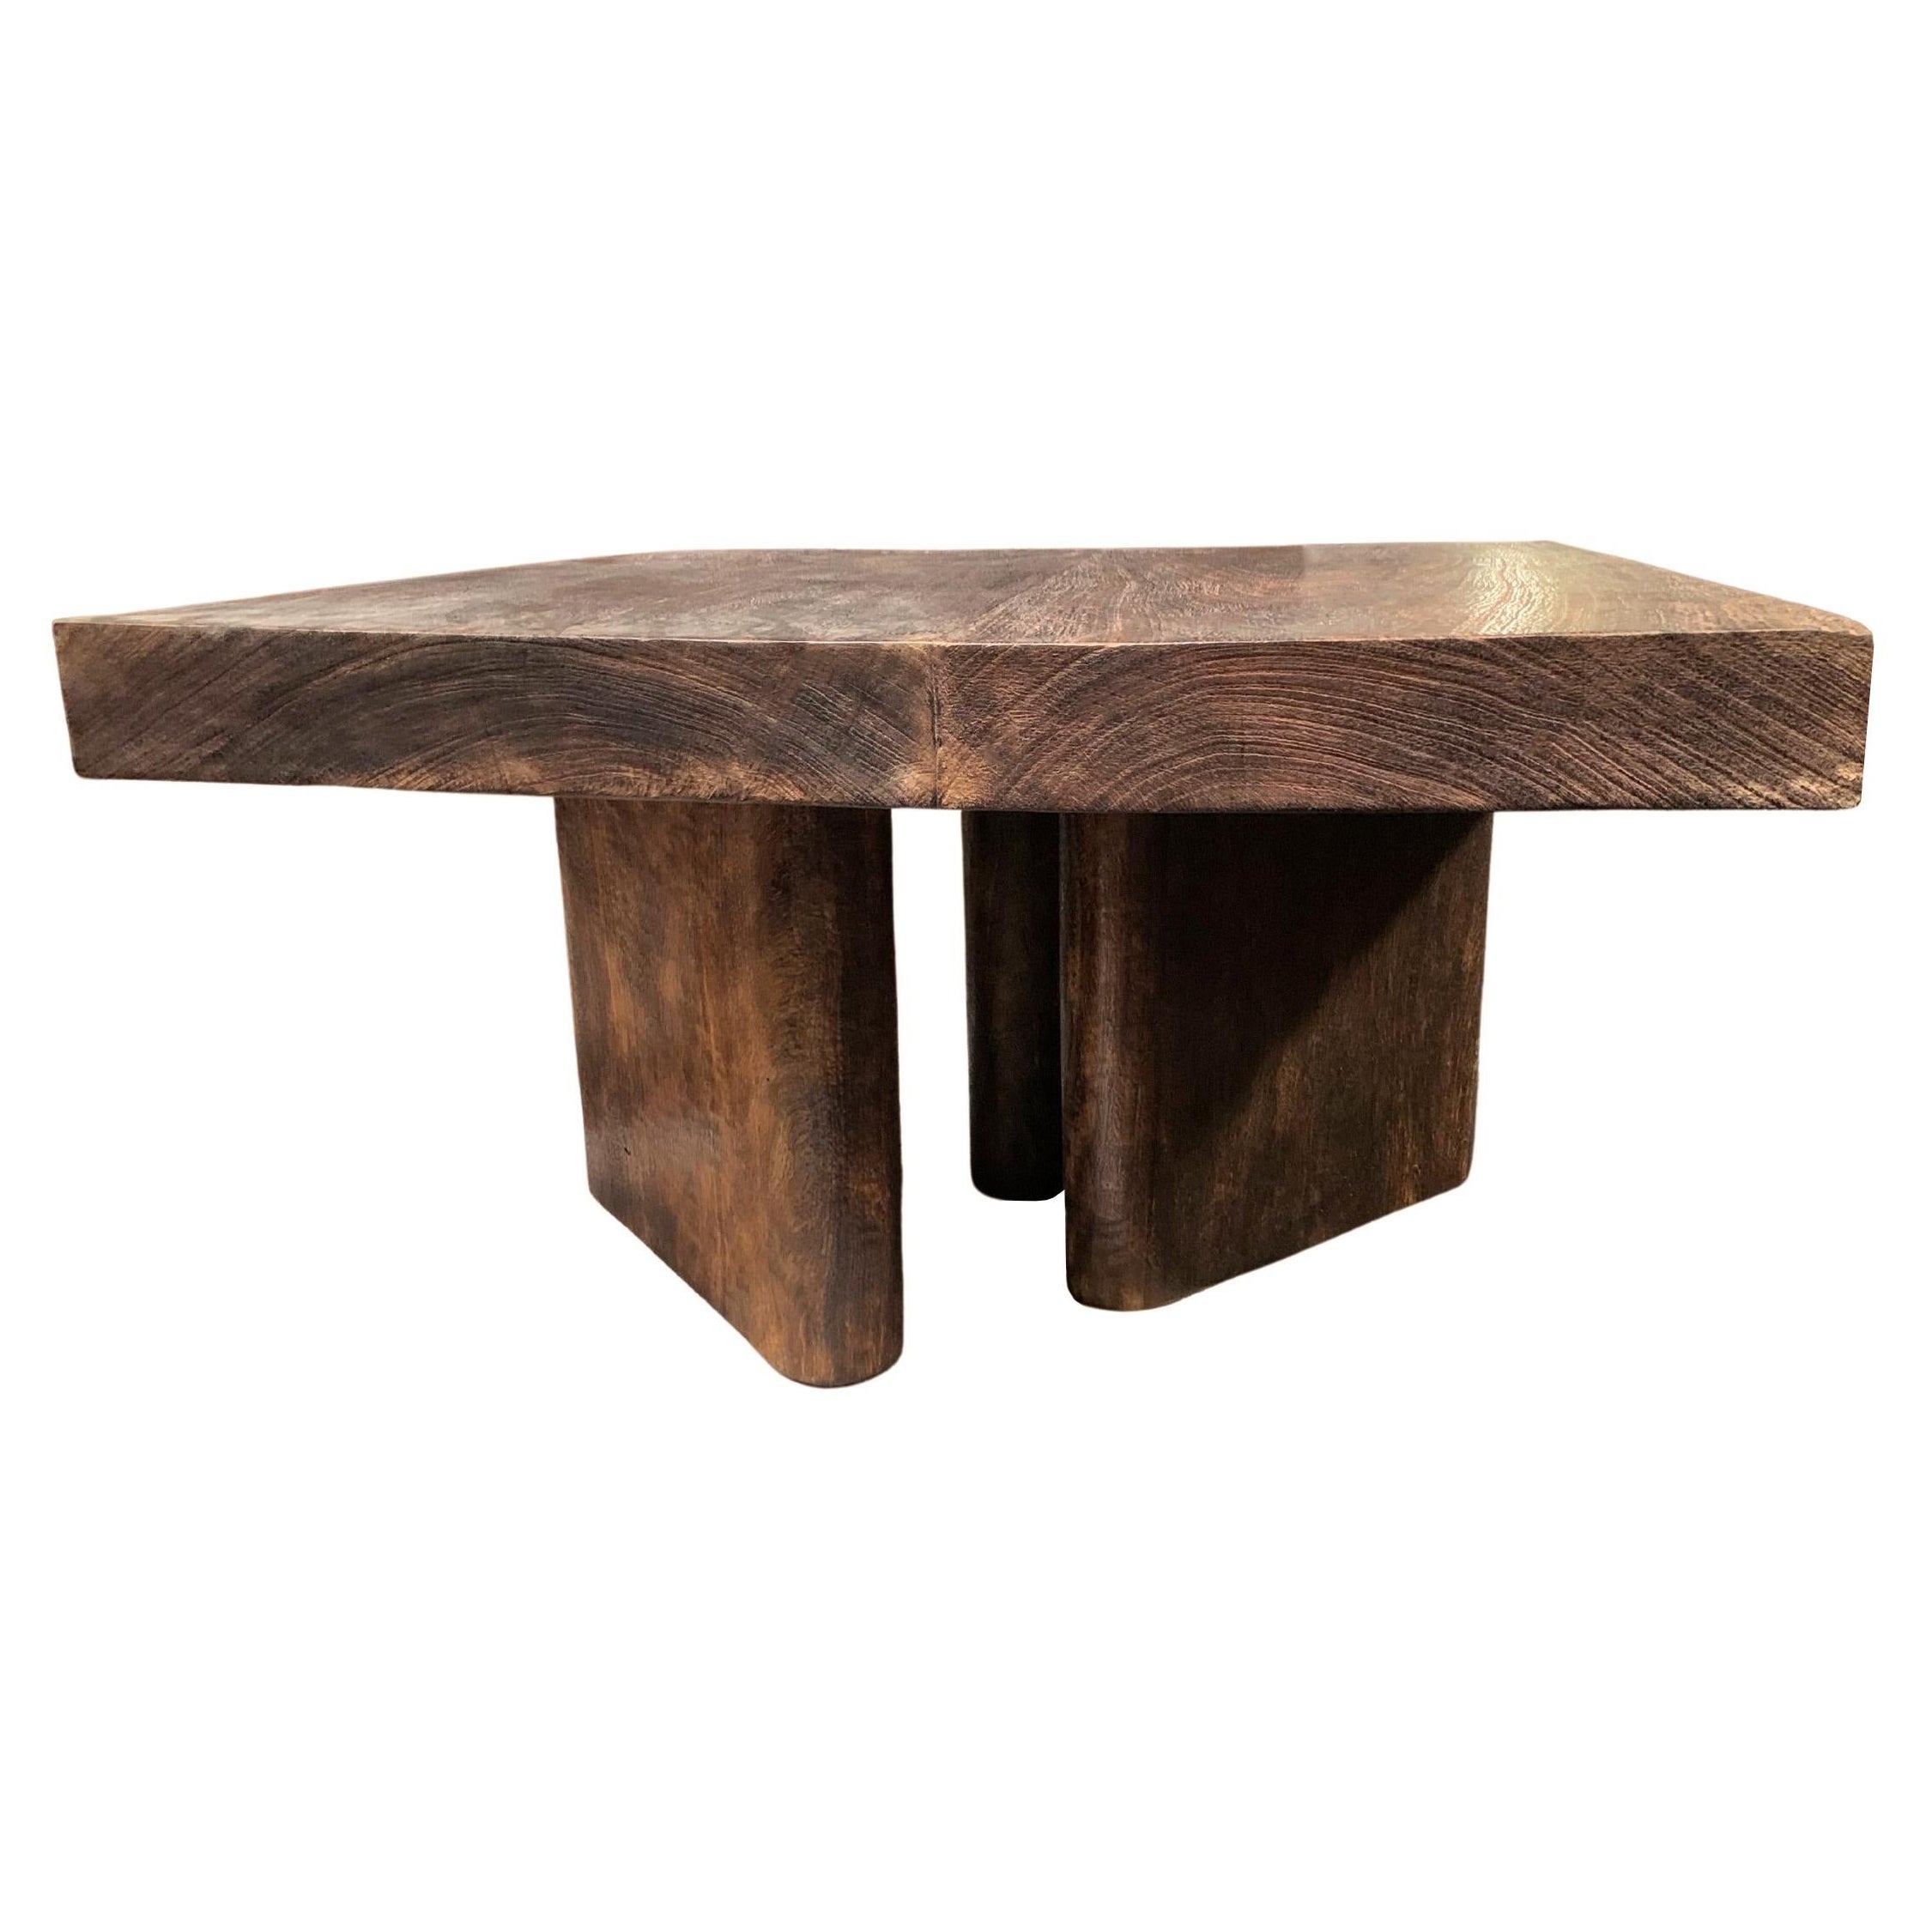 Sculptural Mango Wood Table Espresso Finish Modern Organic For Sale